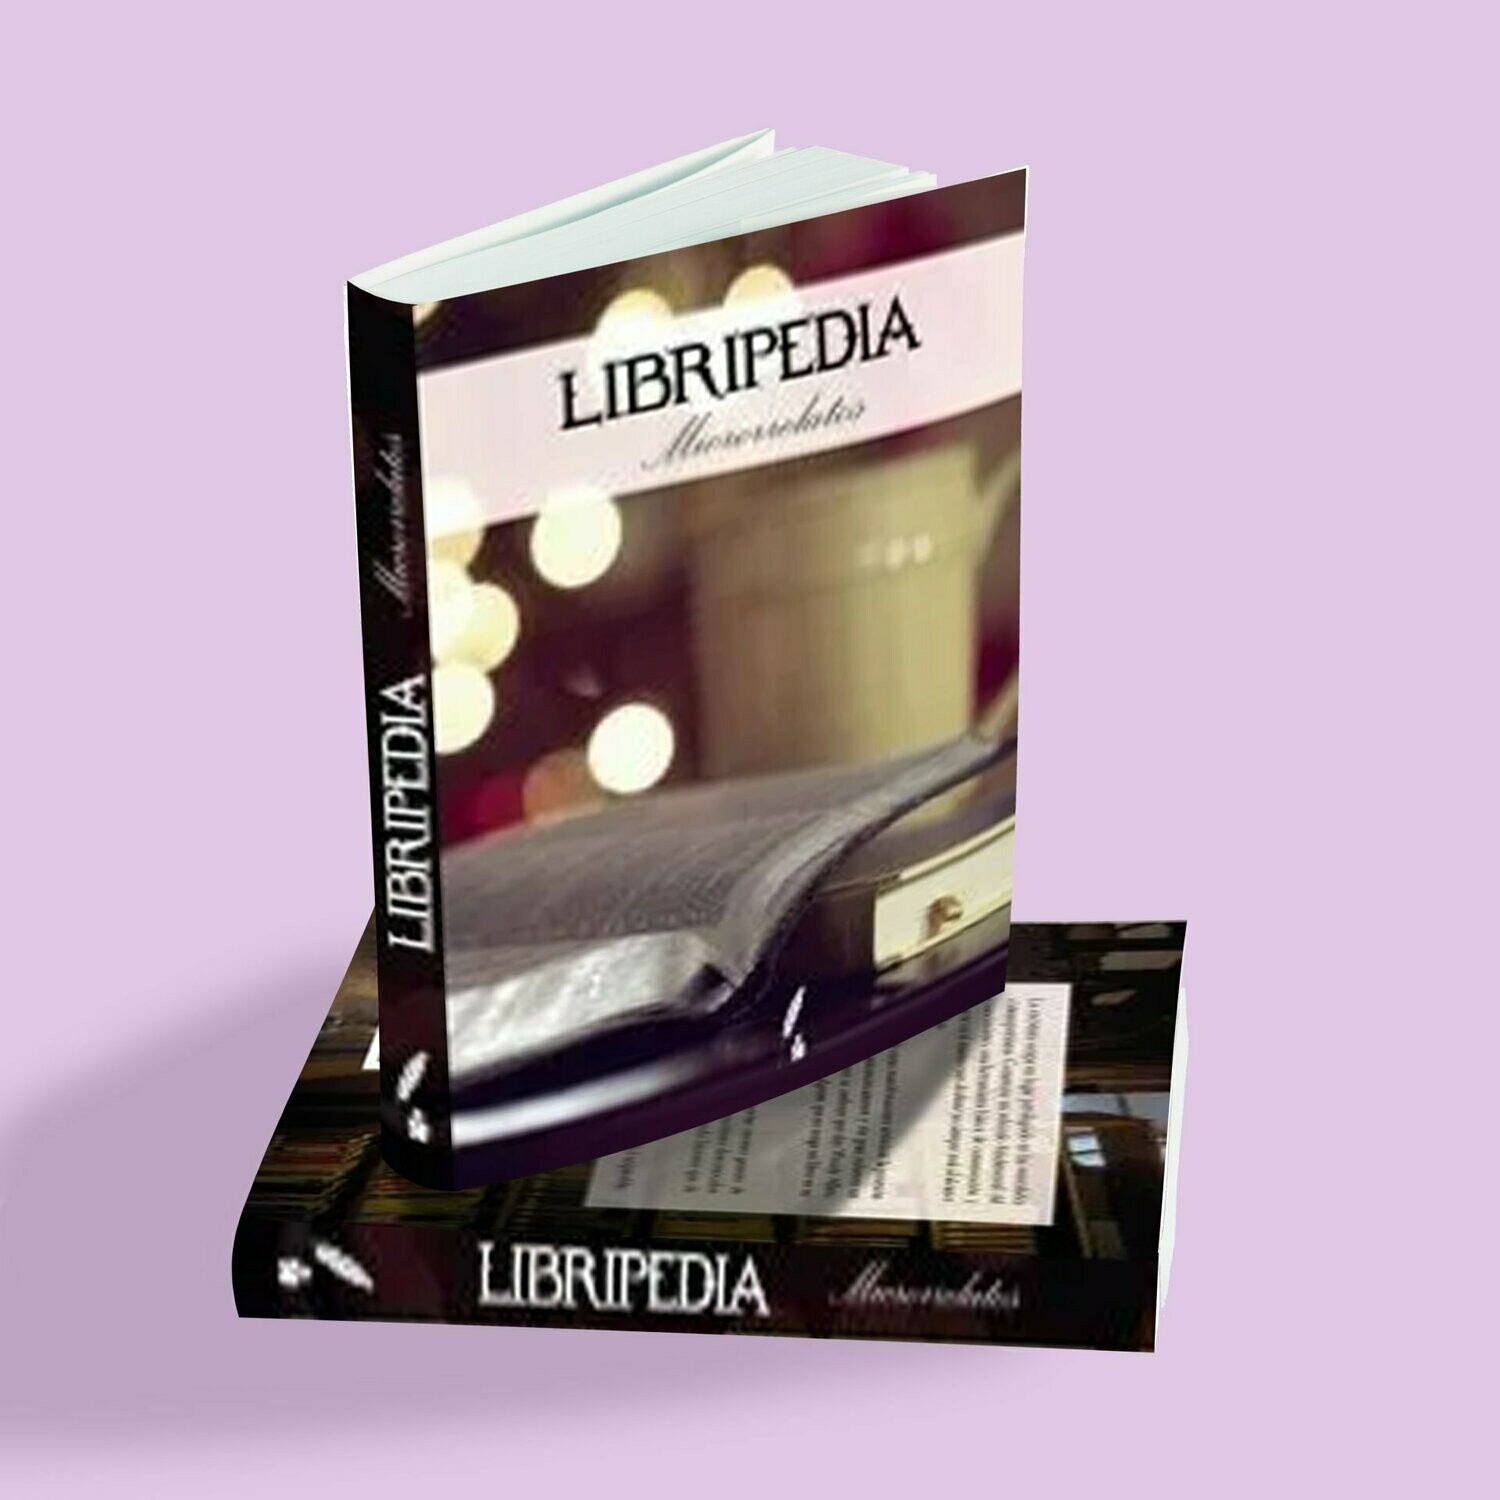 Libripedia Microrrelatos II